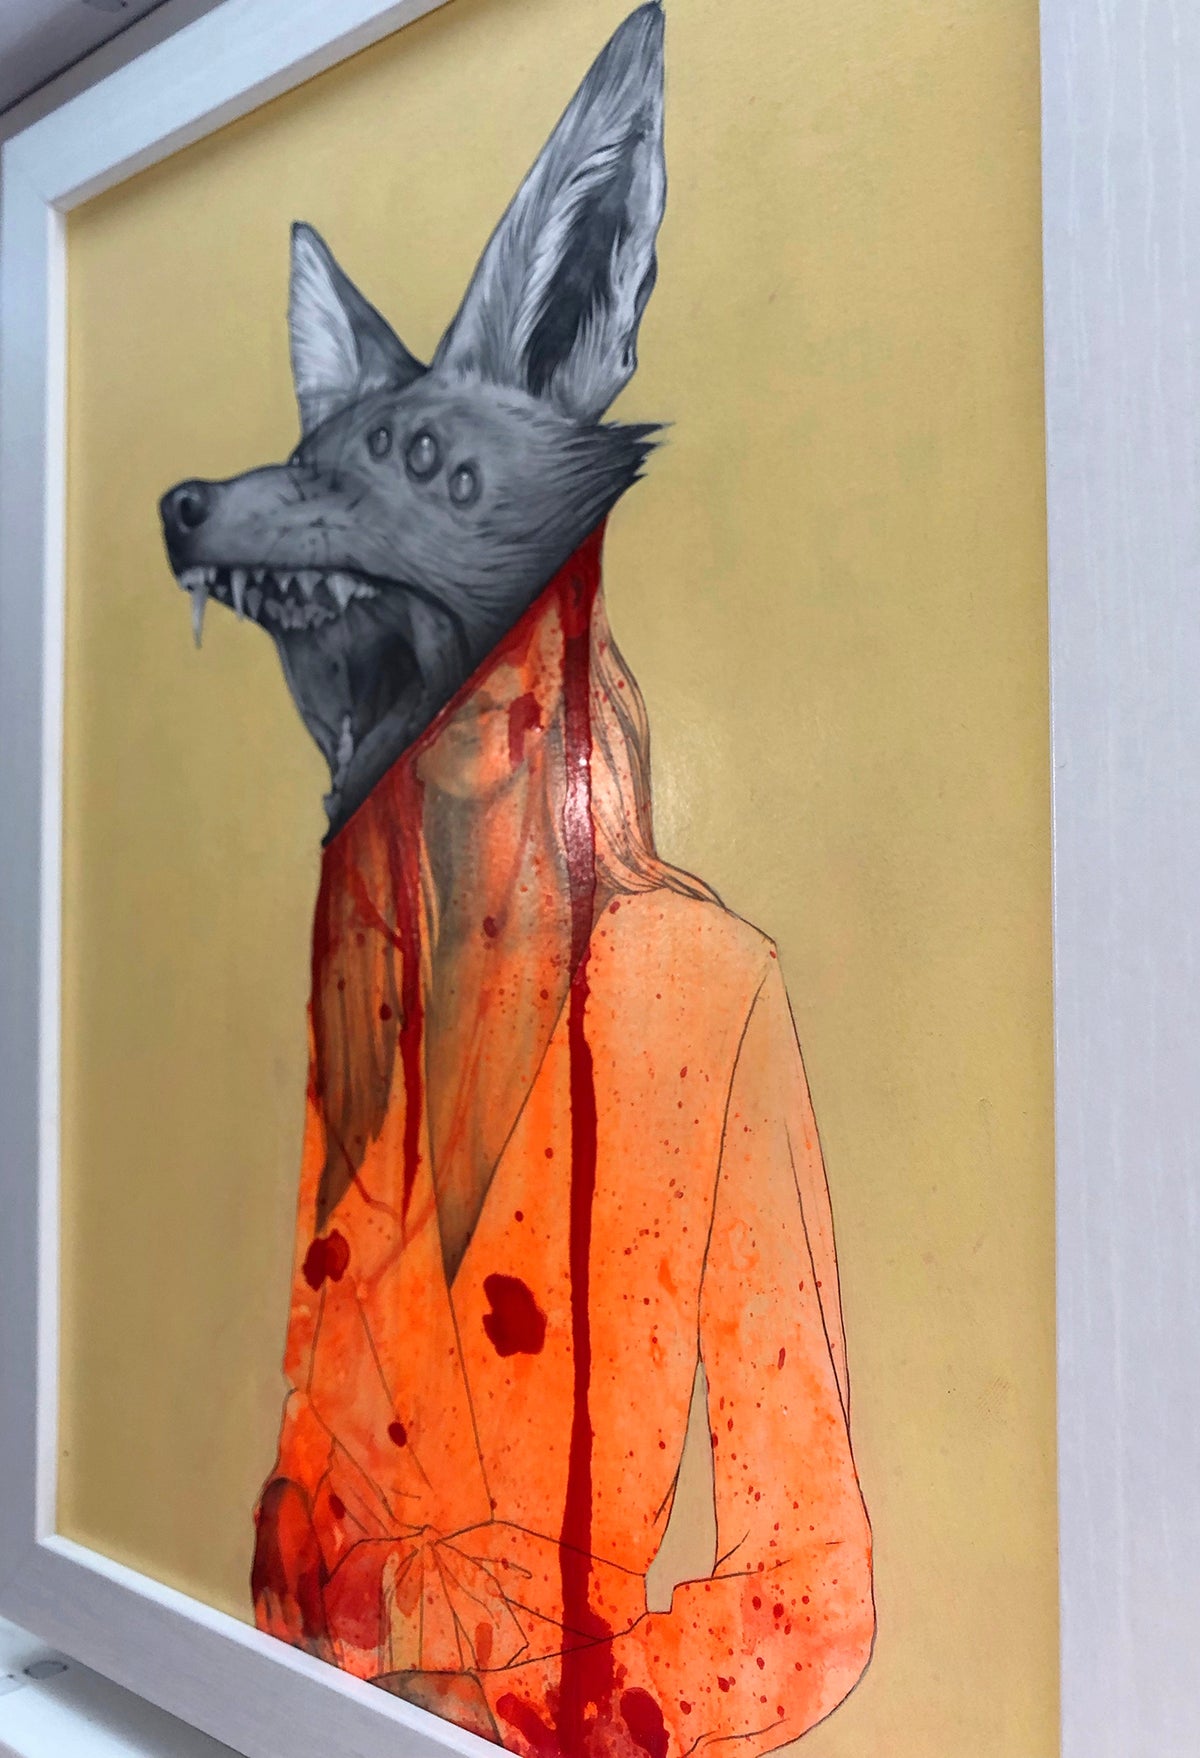 Matt Byle &quot;Foxy&quot; - Original Painting, Framed - 15.5 x 12.5 x .5&quot;